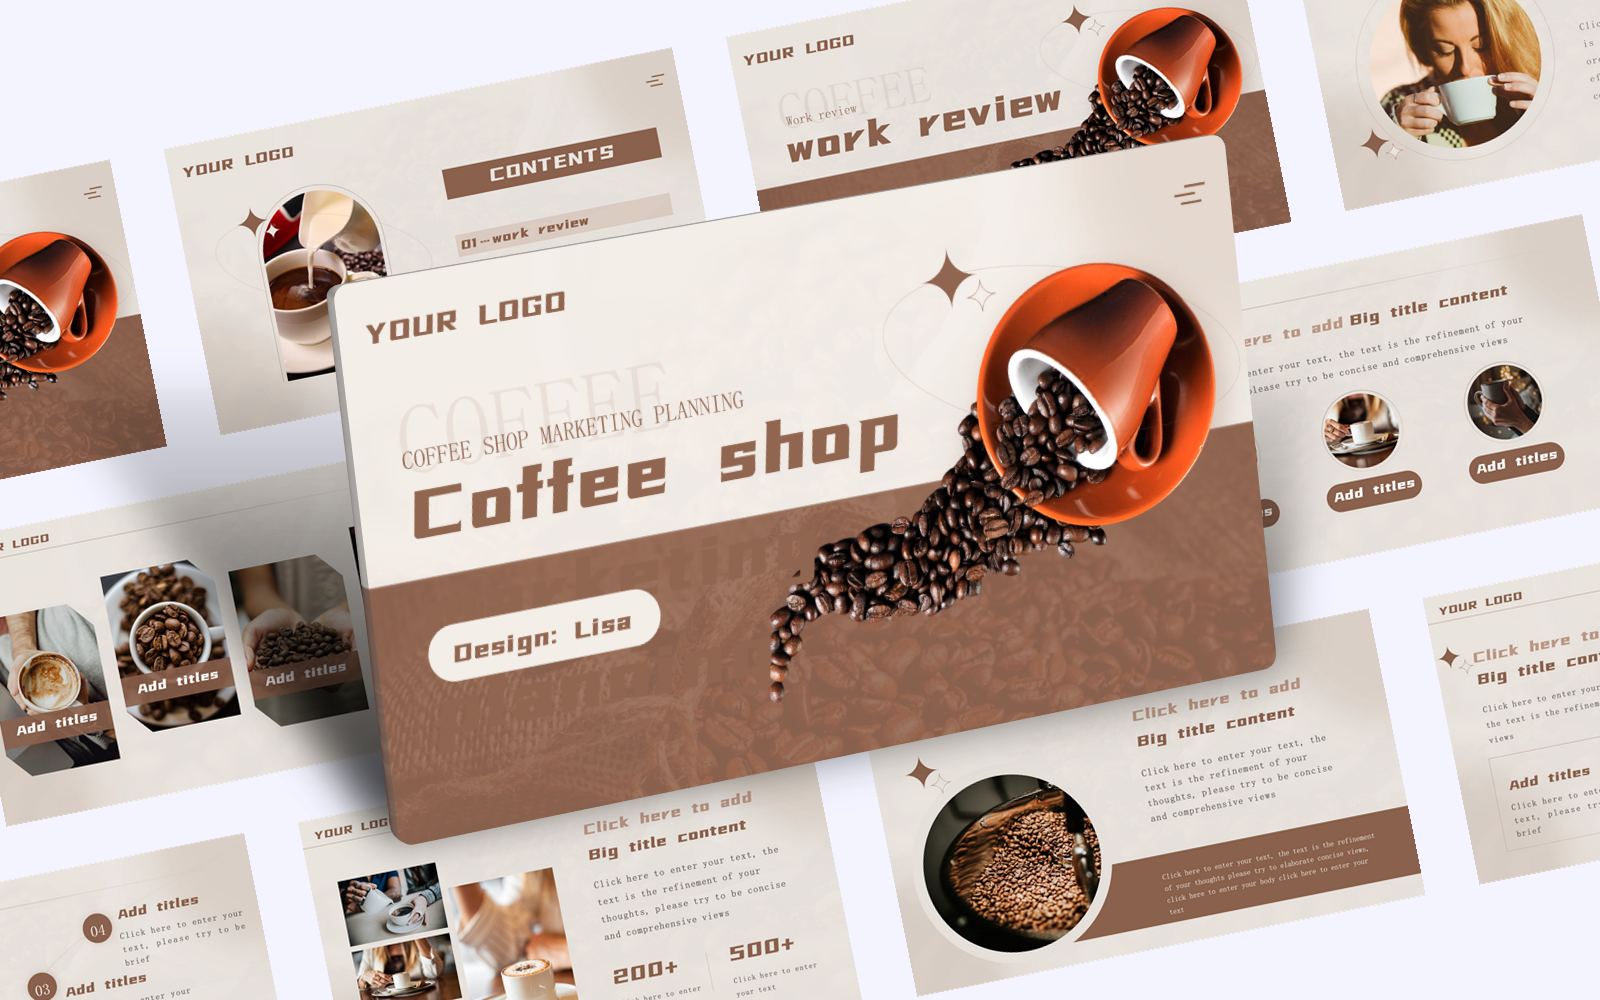 Coffee Shop Coffee Brand Marketing Planning PPT